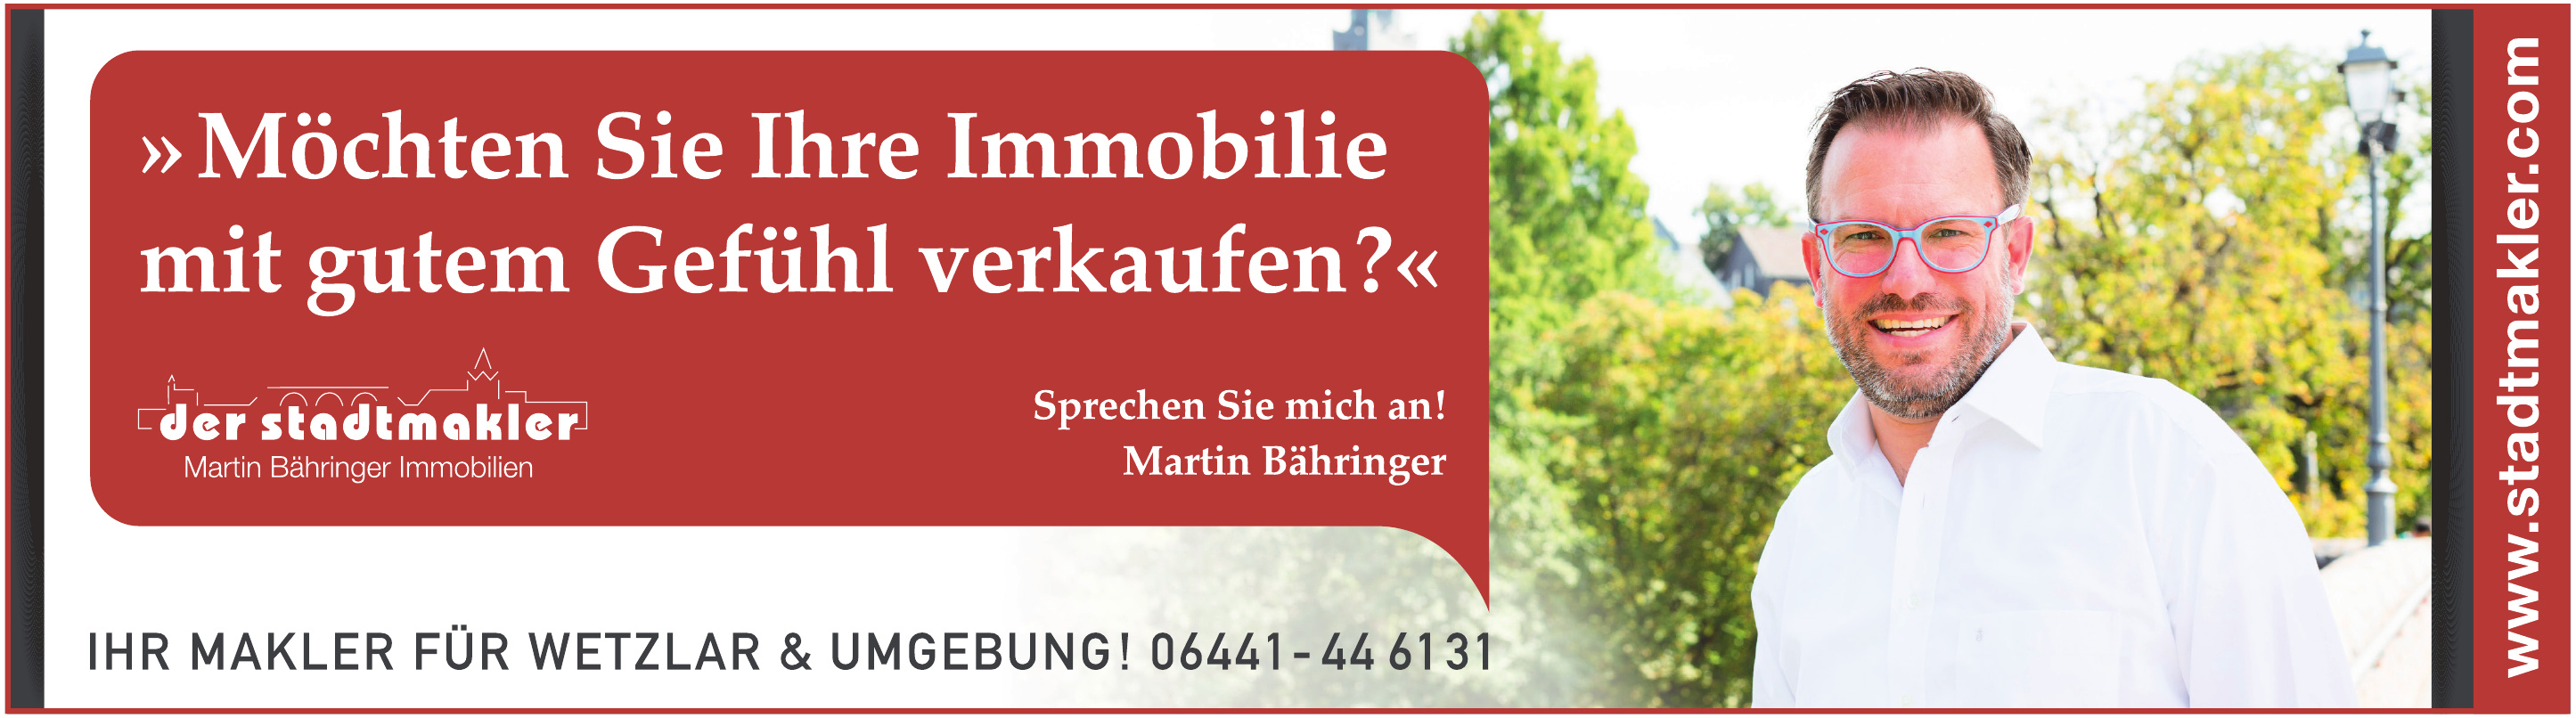 der stadtmakler - Martin Bähringer Immobilien GmbH & Co. KG